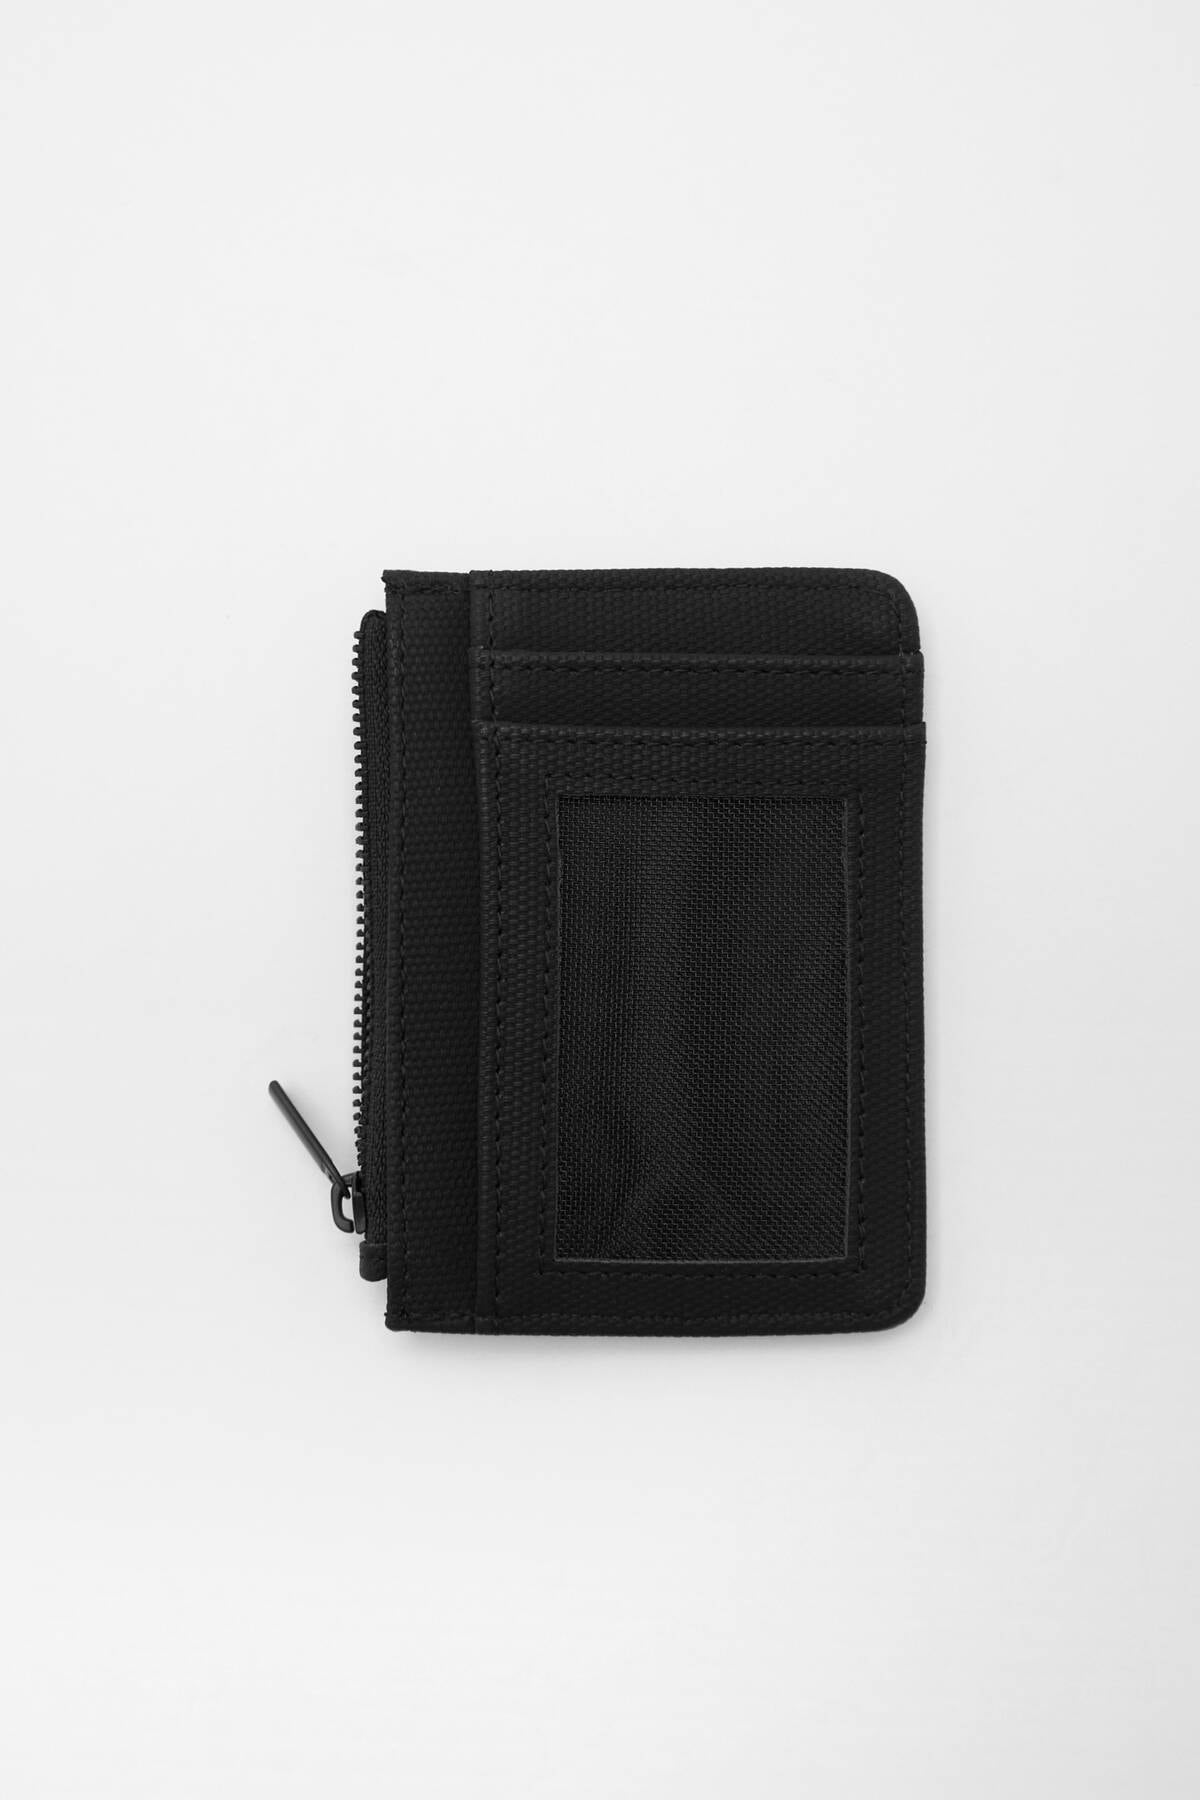 Black faux leather card holder wallet